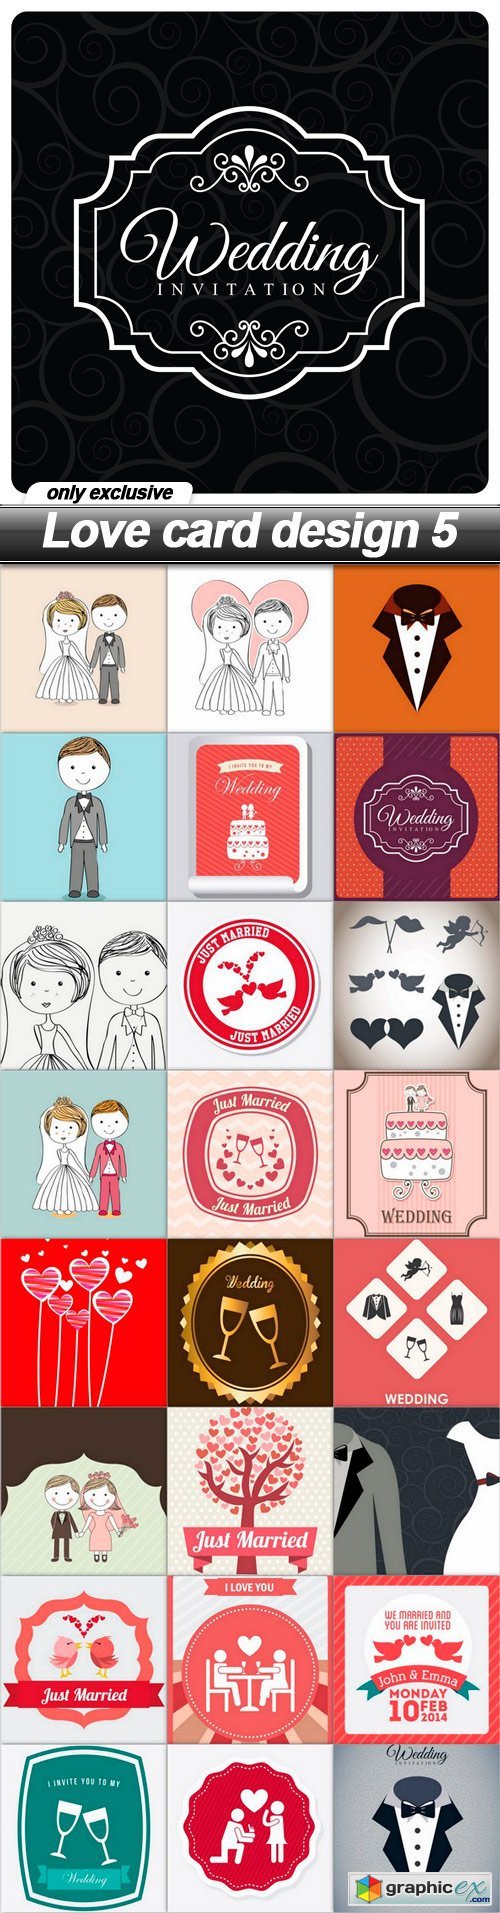 Love card design 5 - 25 EPS